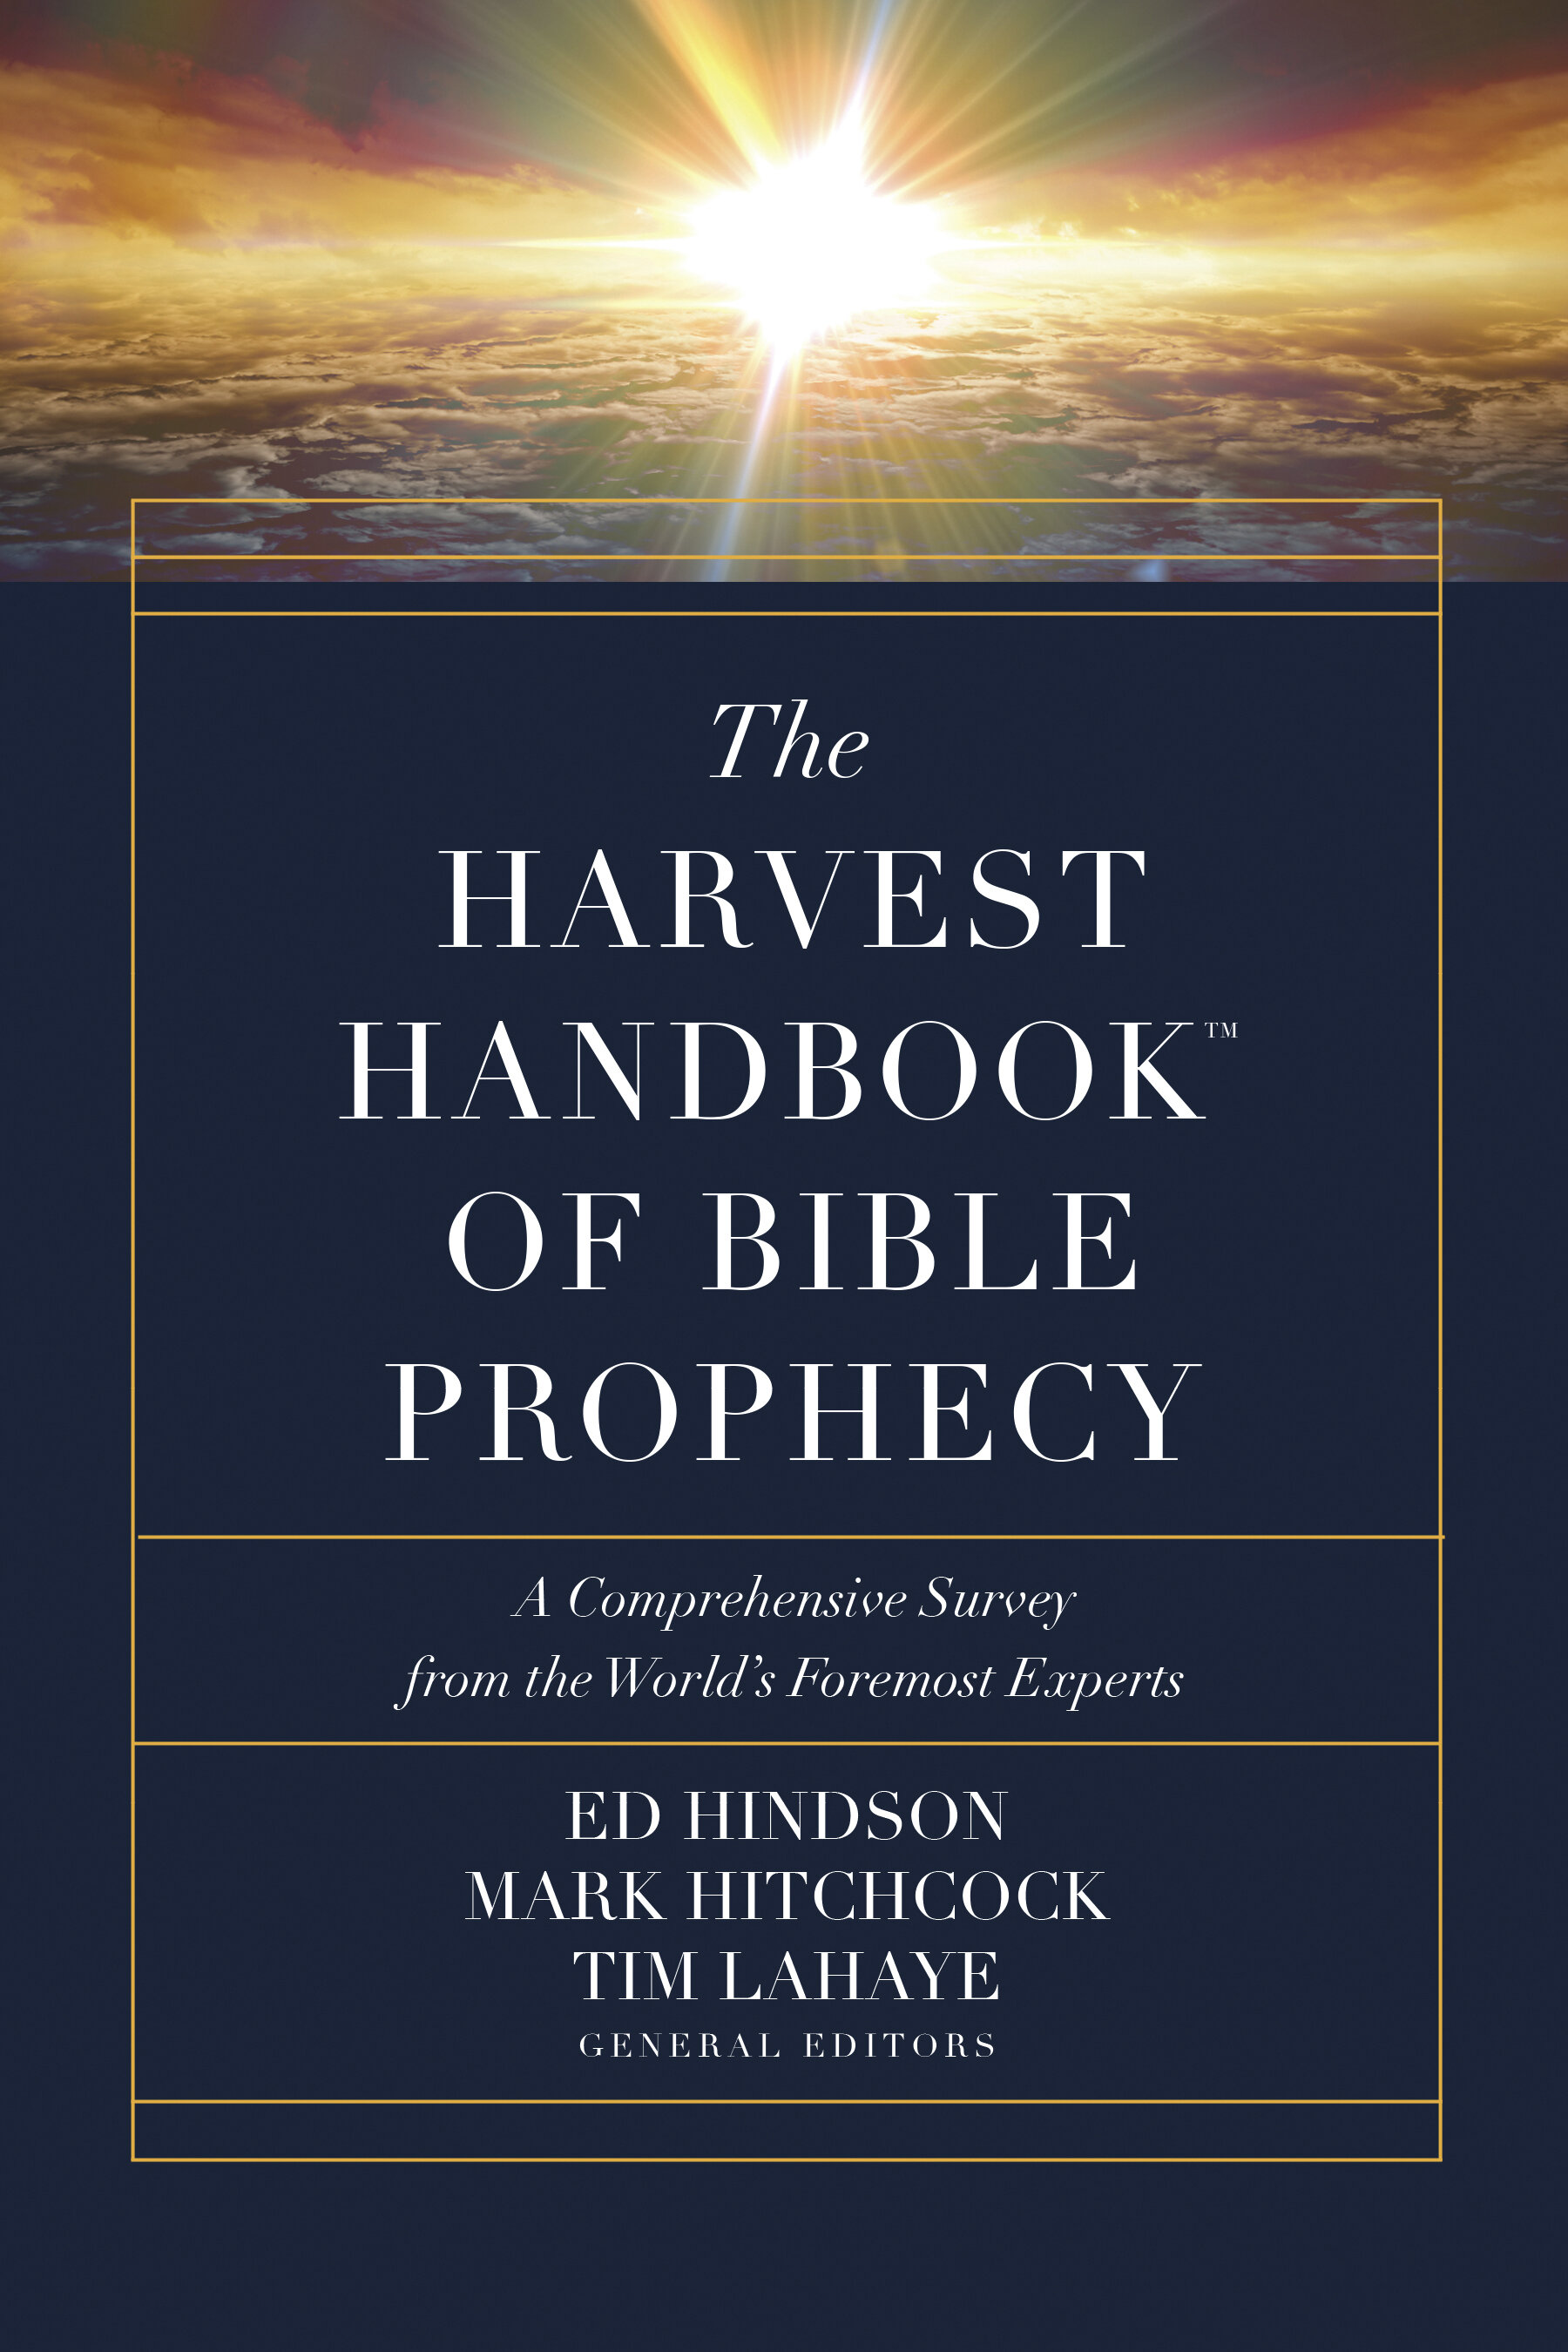 The Harvest Handbook of Bible Prophecy